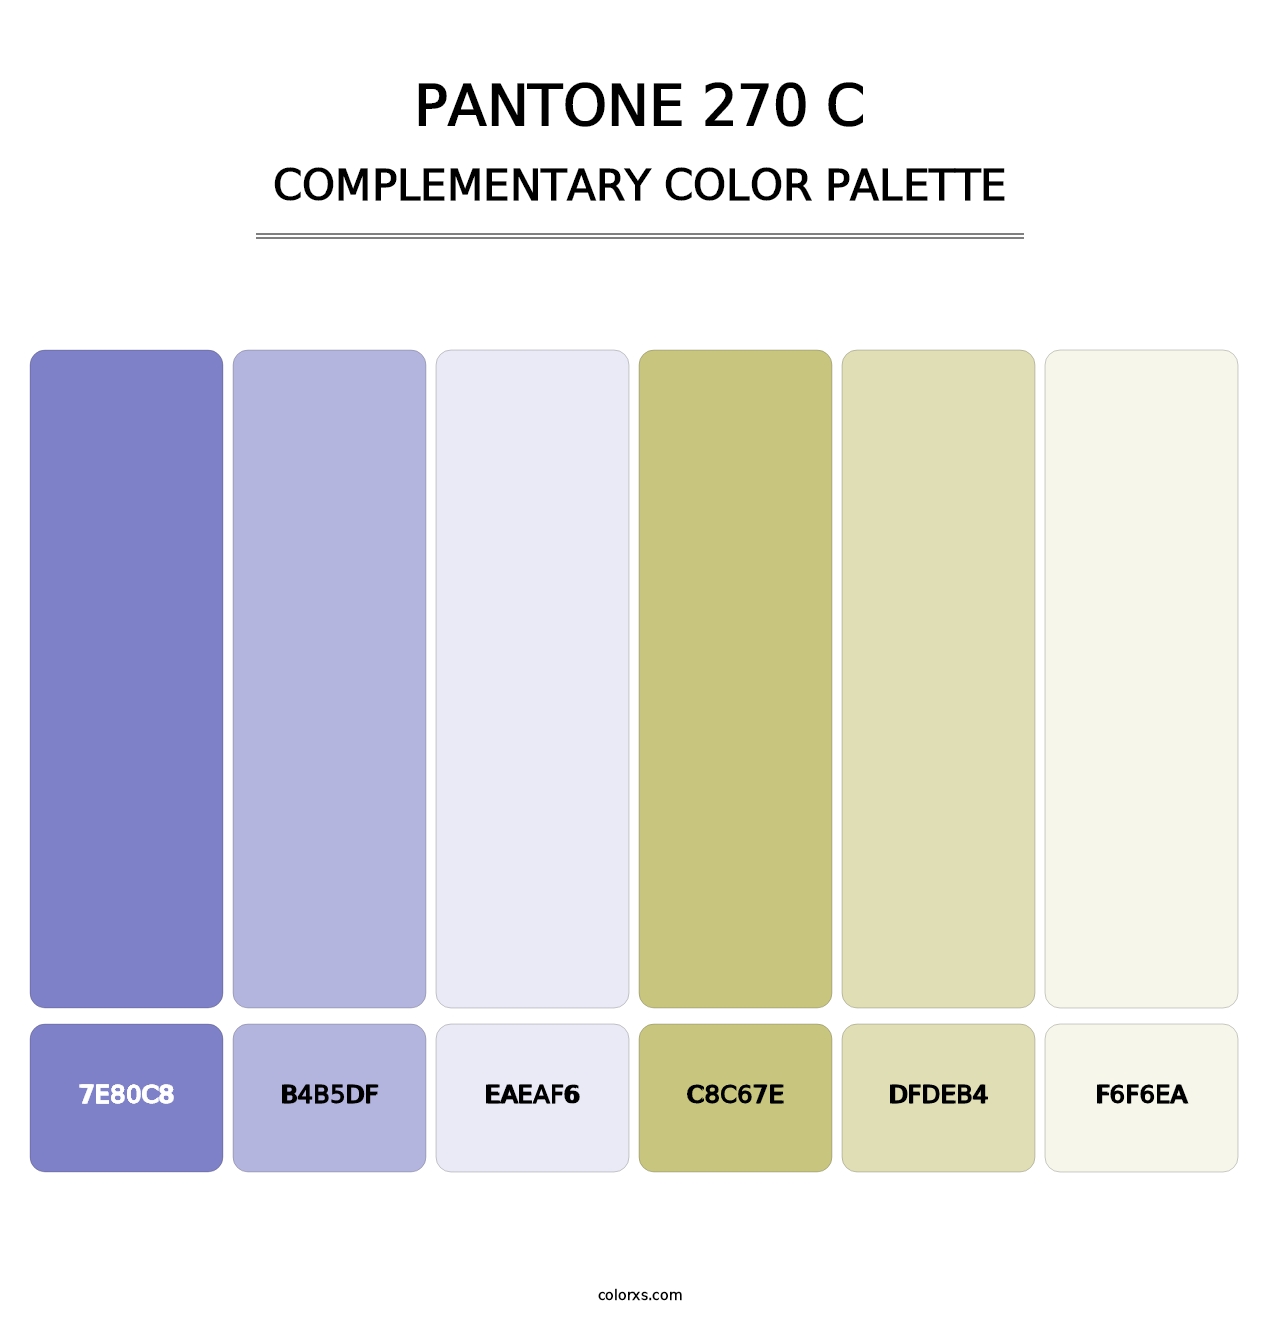 PANTONE 270 C - Complementary Color Palette